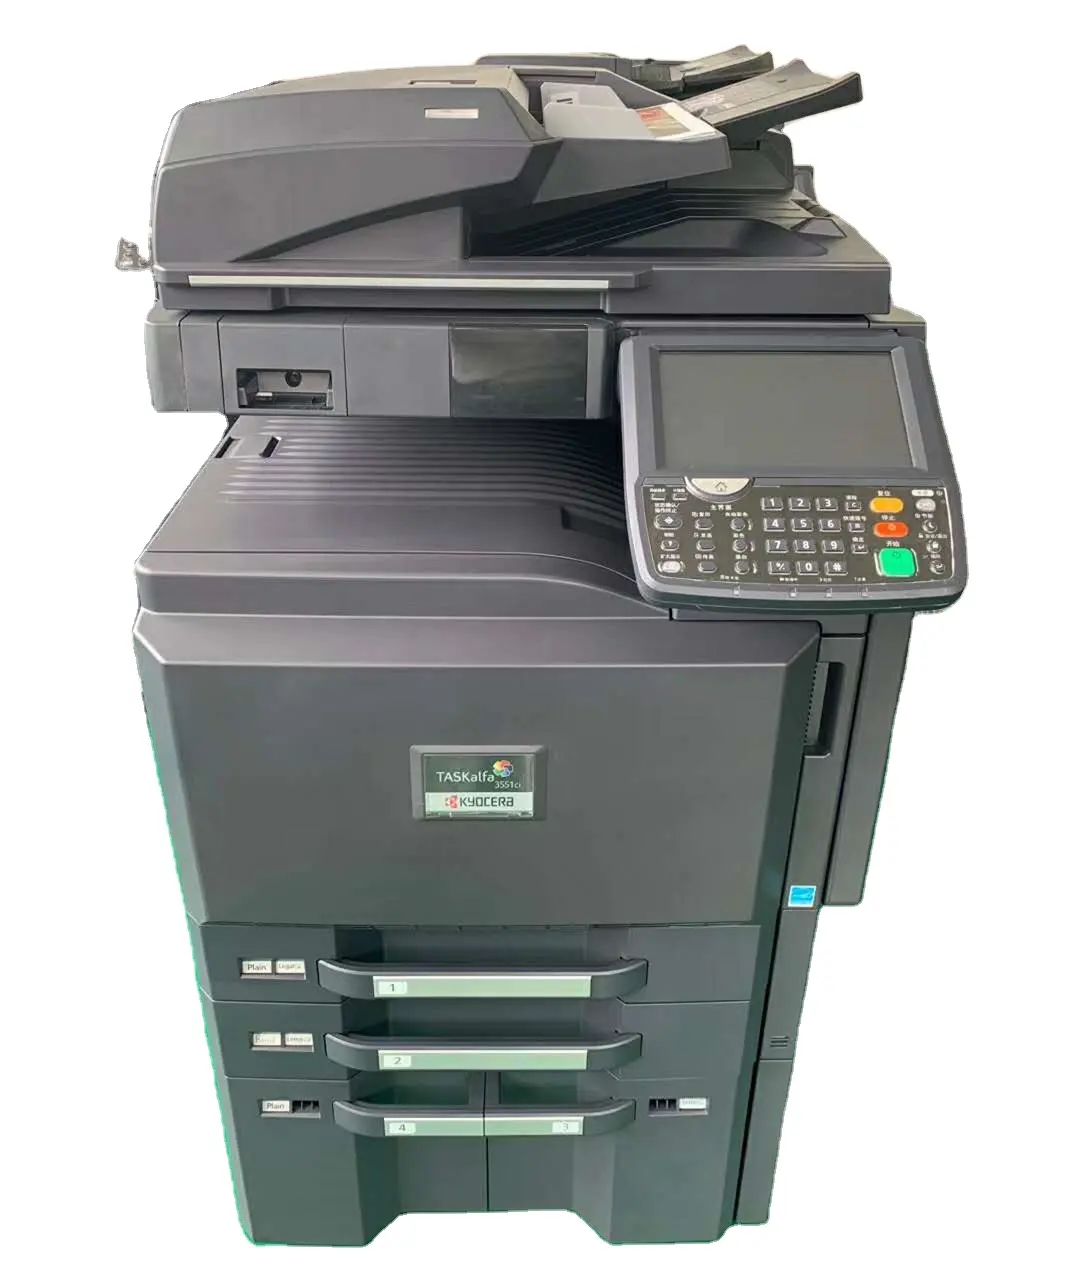 Kyocera TASKalfa 3551ci multifunction printer,Used A3 Color MFP Copier